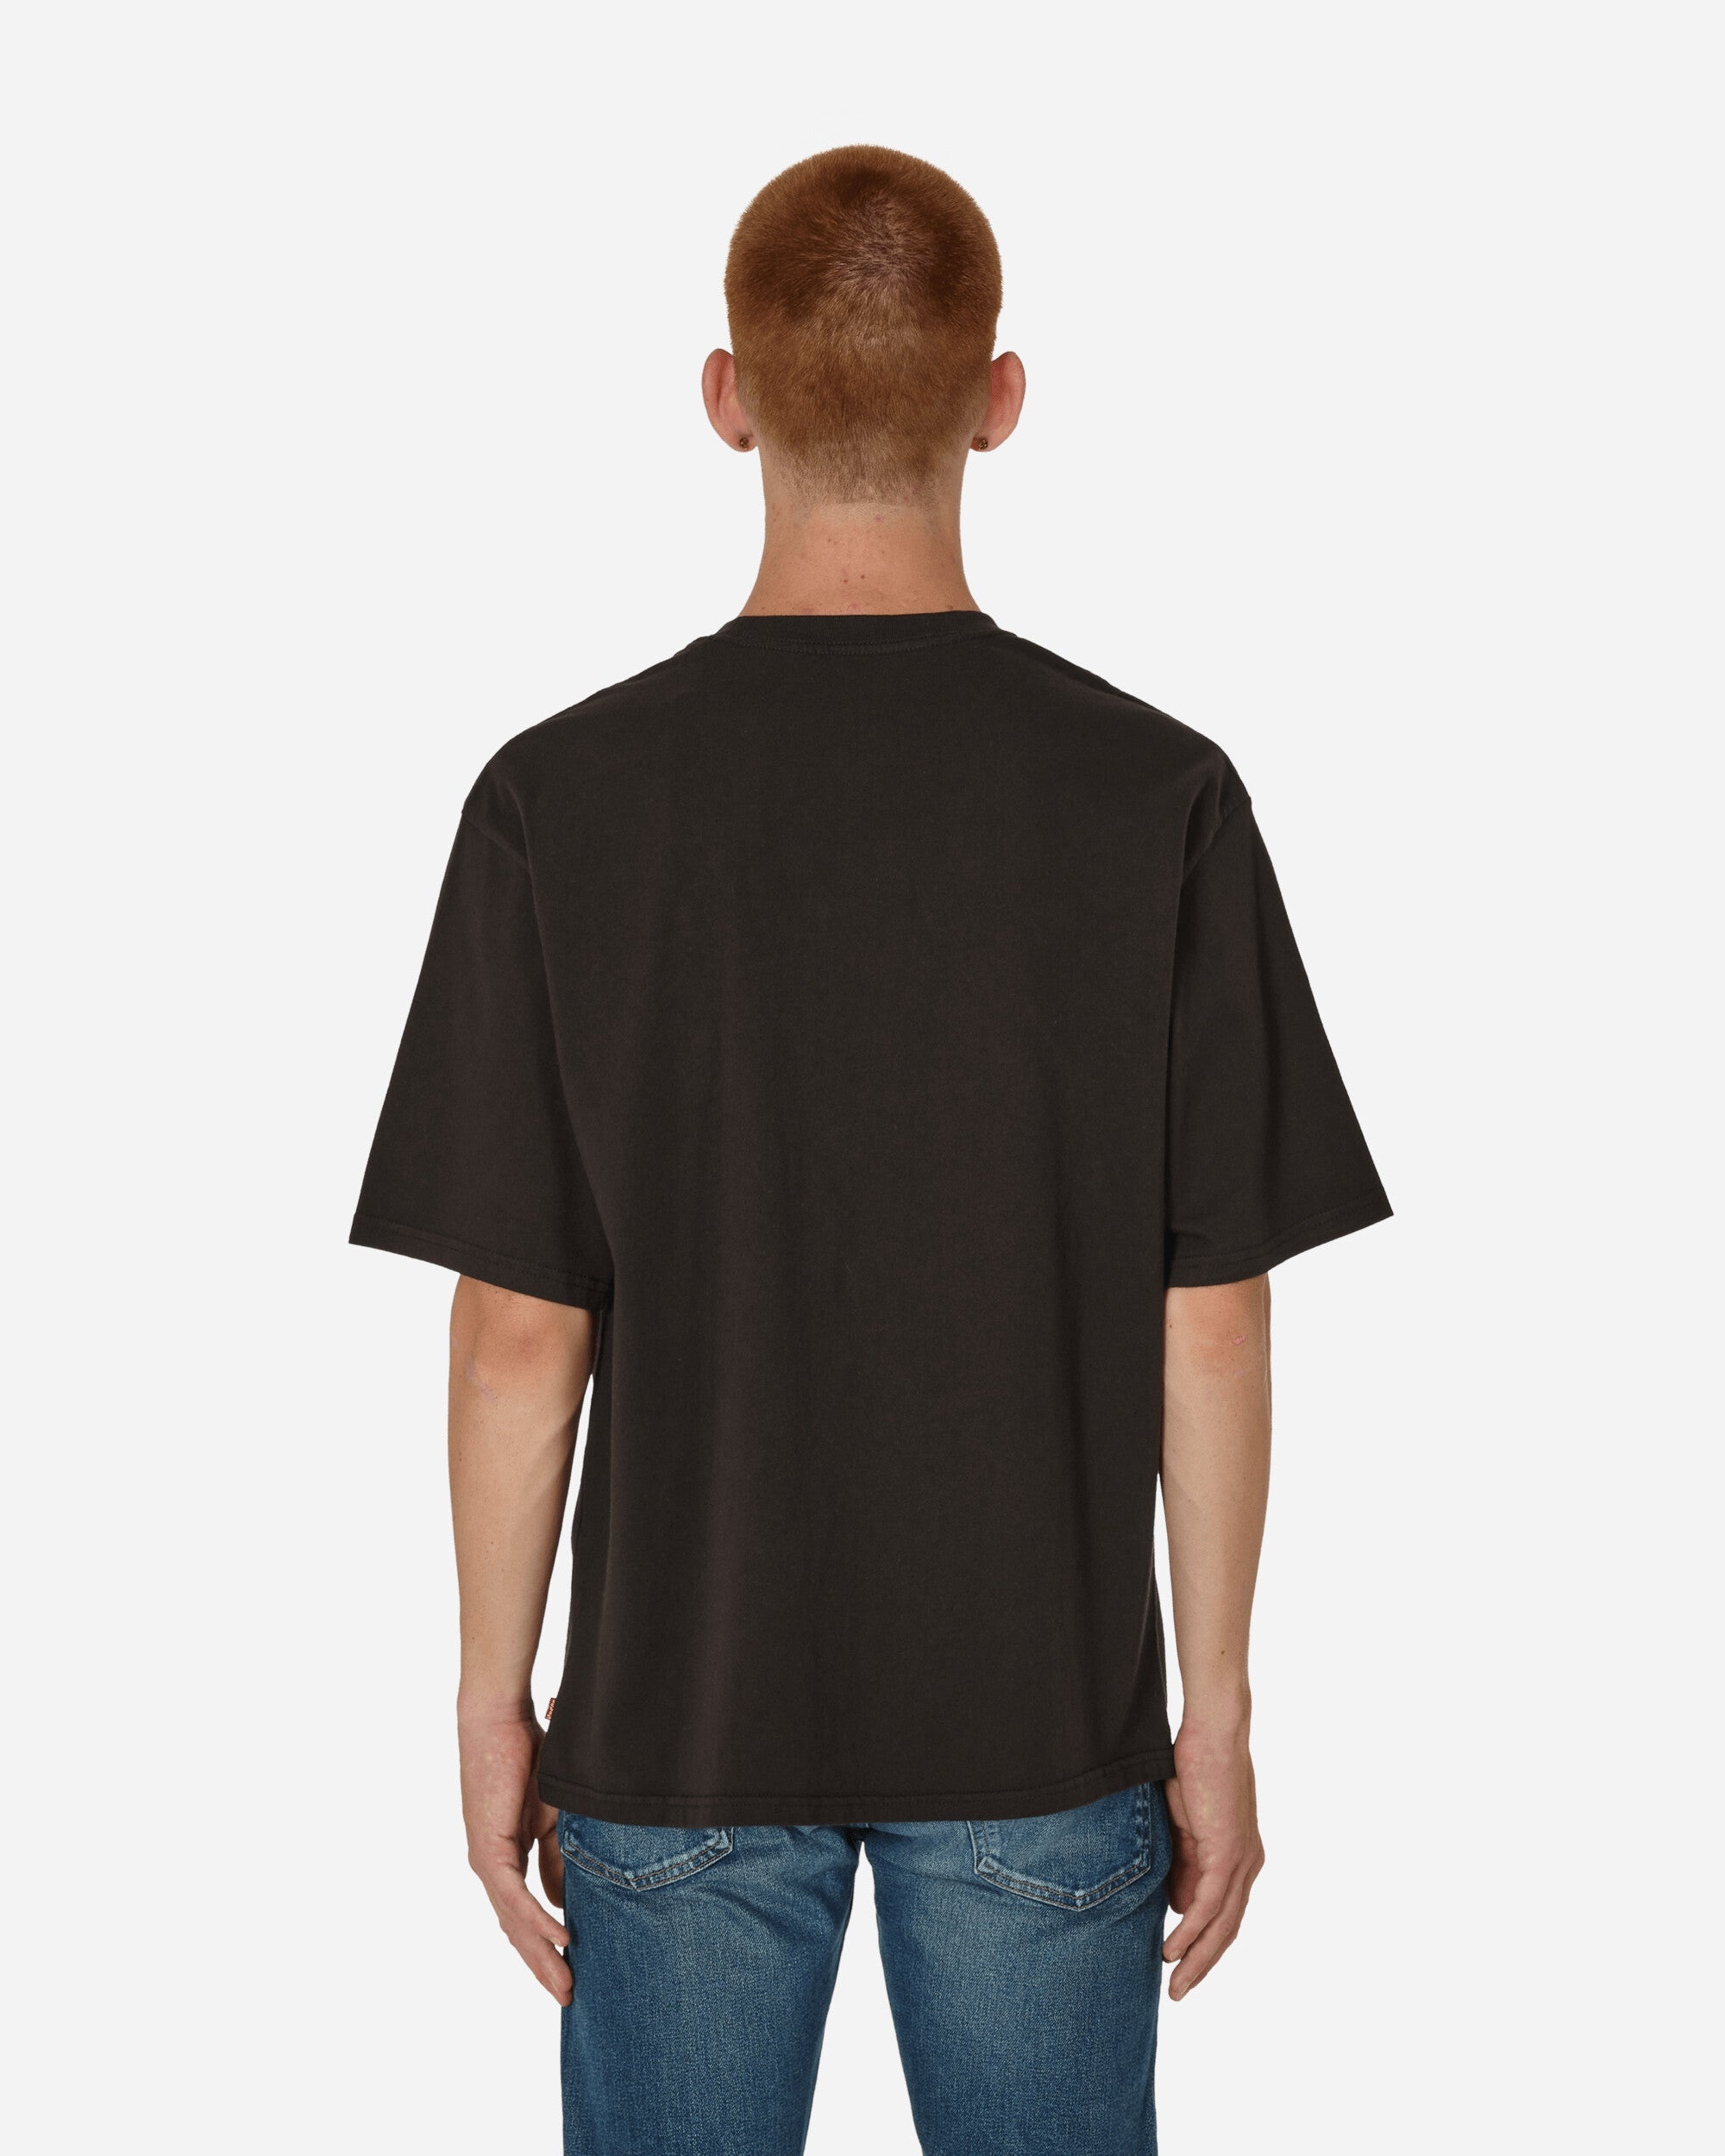 The Half Sleeve T-Shirt Black - 3